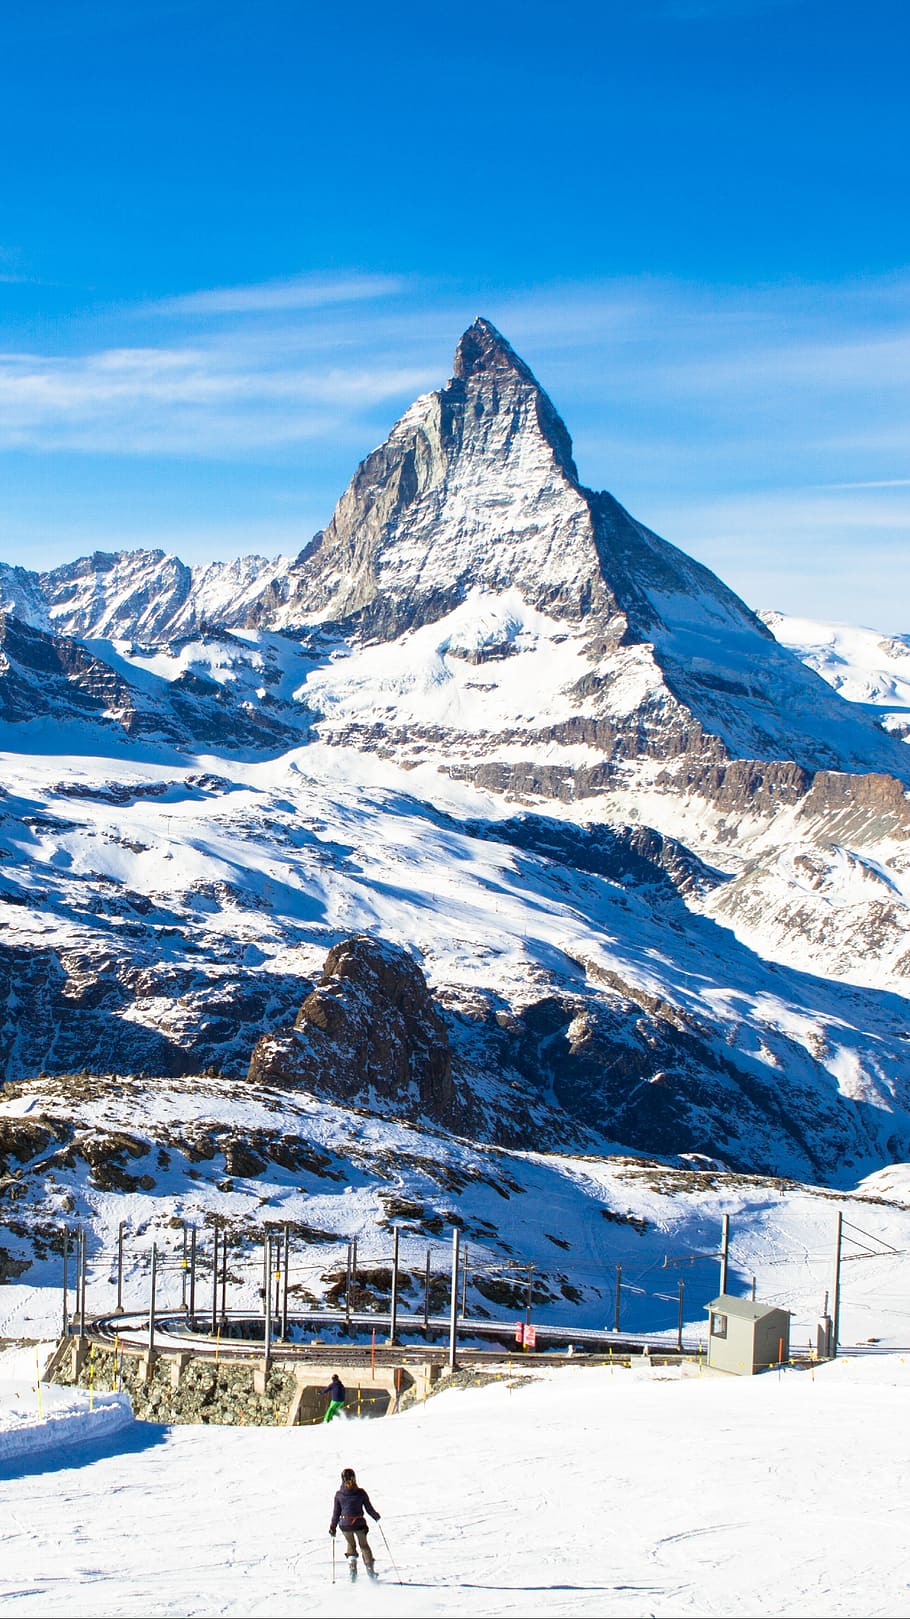 Hd Wallpaper Switzerland Zermatt Matterhorn Glacier Skiing Skier Mountain Wallpaper Flare